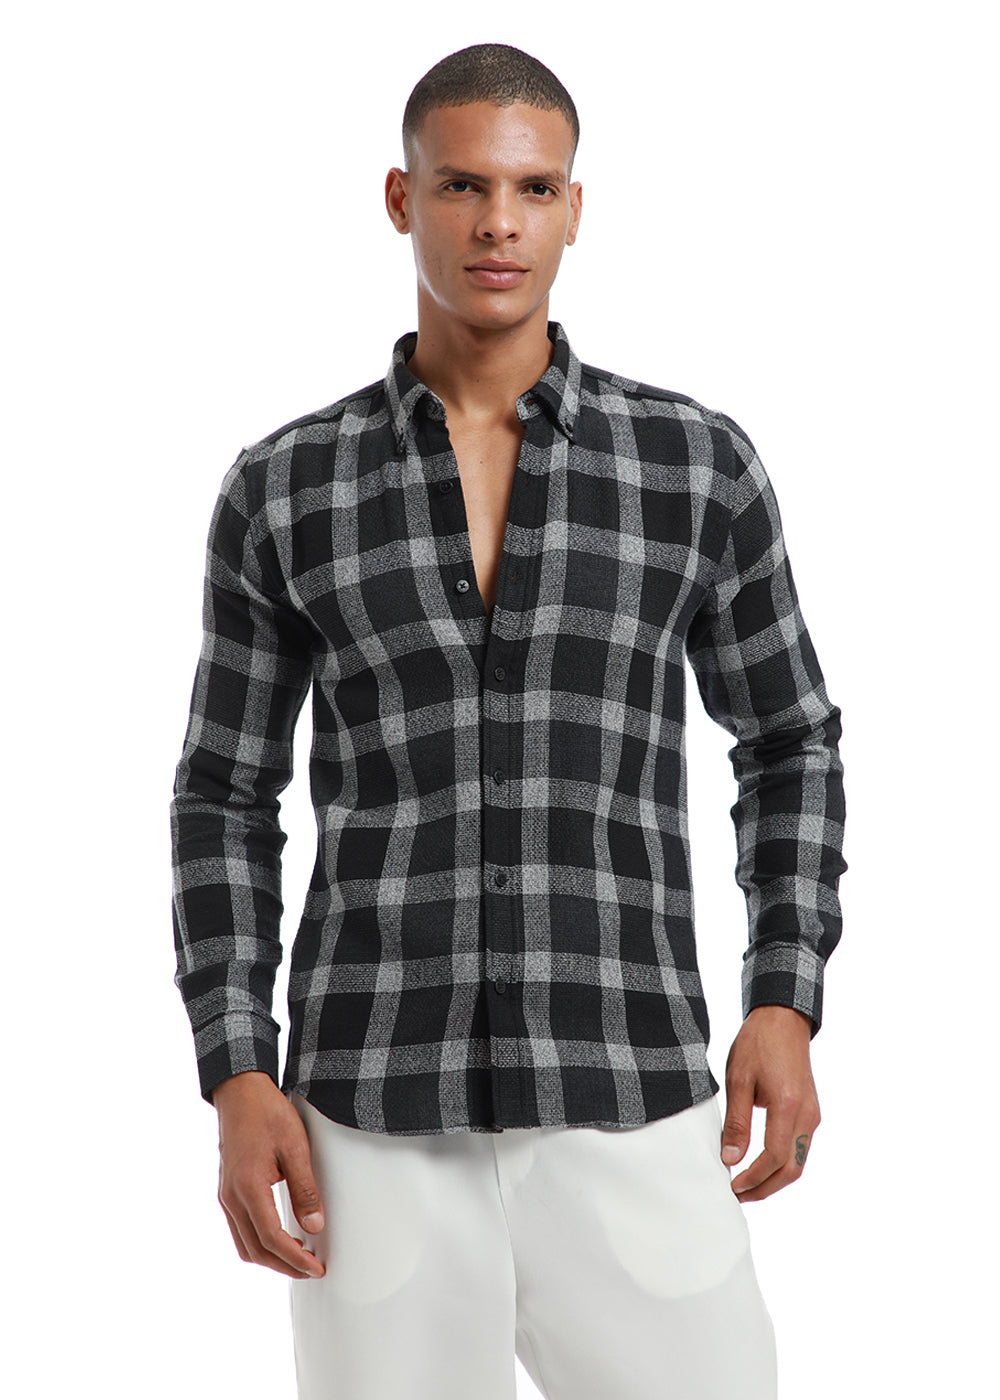 Melange Square Grid Black Check Shirt